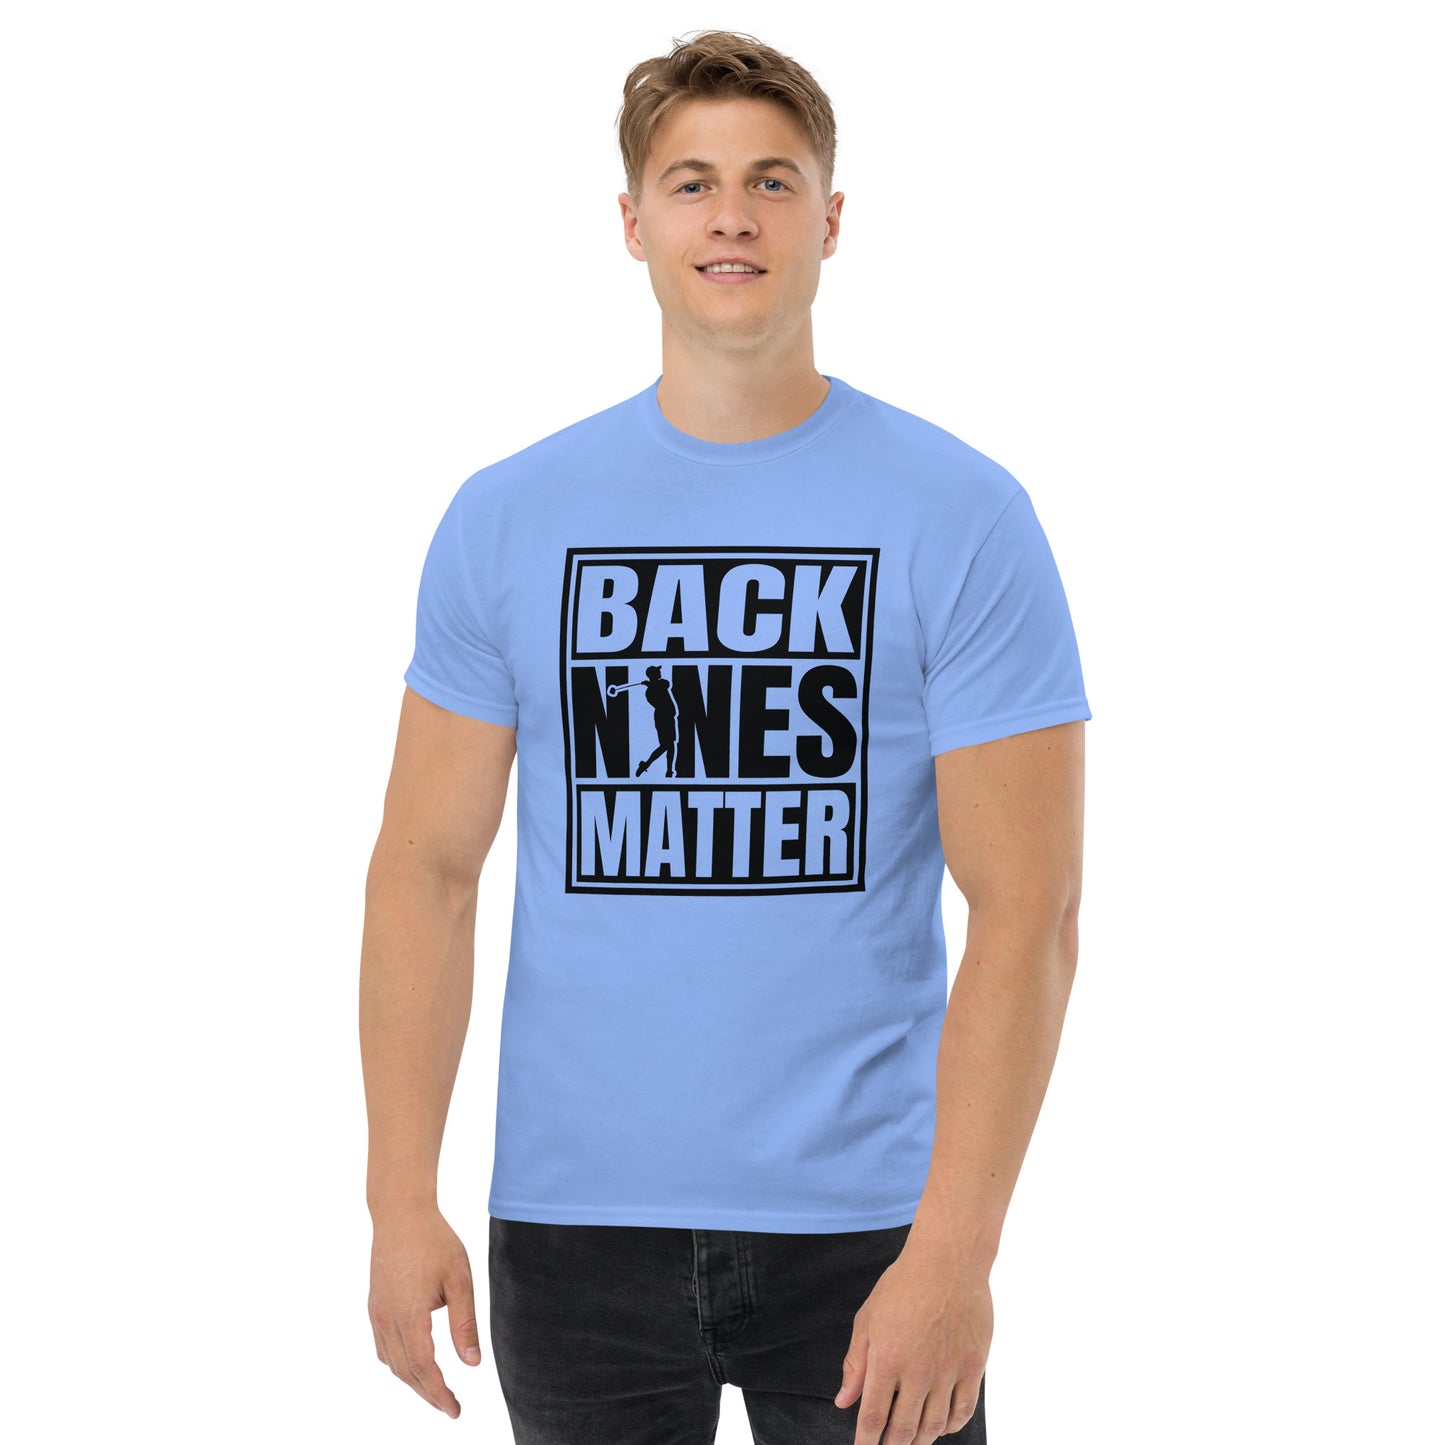 Back Nines Matter T-Shirt